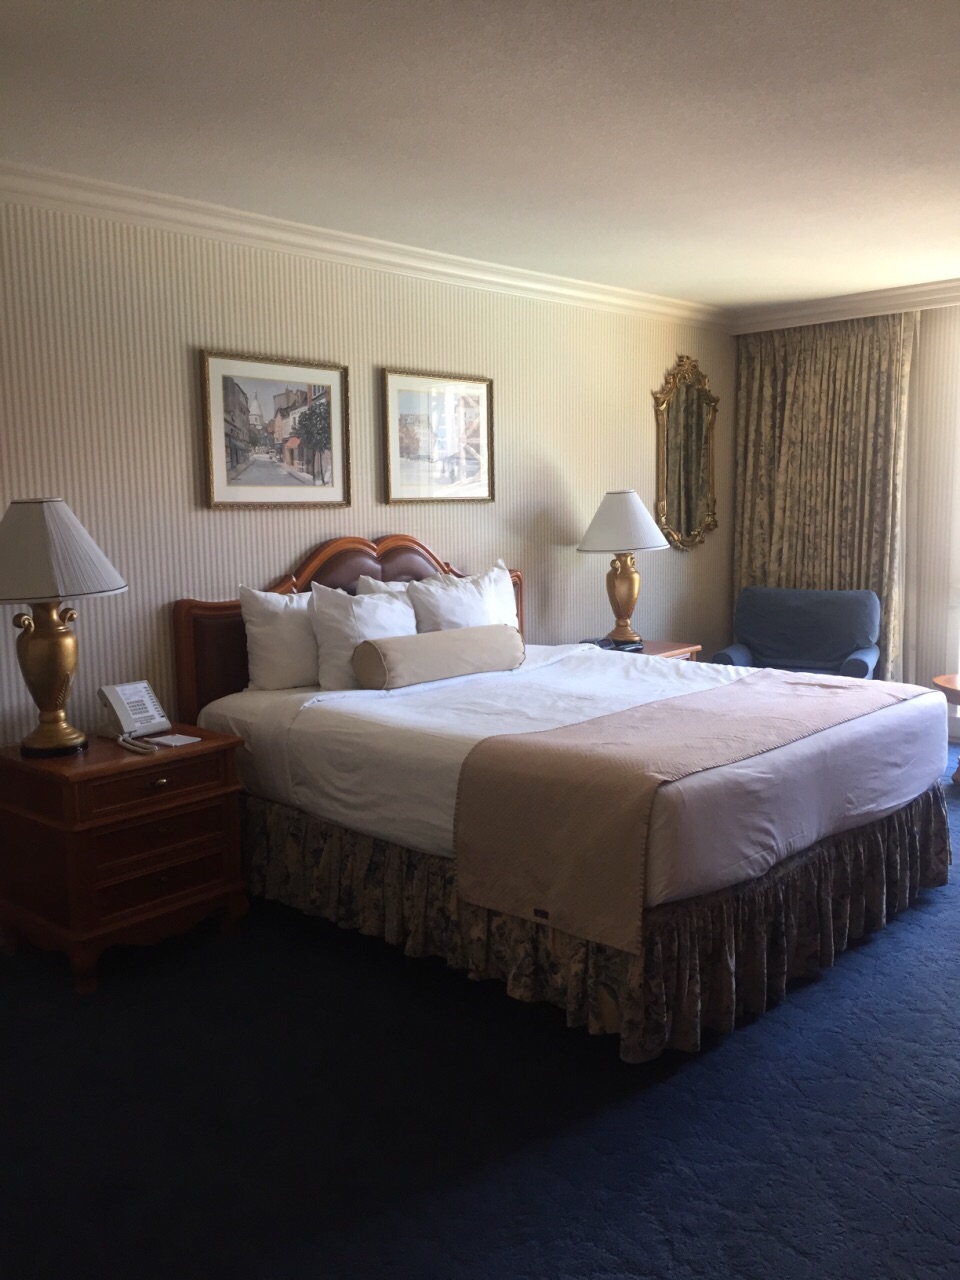 Paris Hotel Las Vegas - Rooms, Photos, Reviews